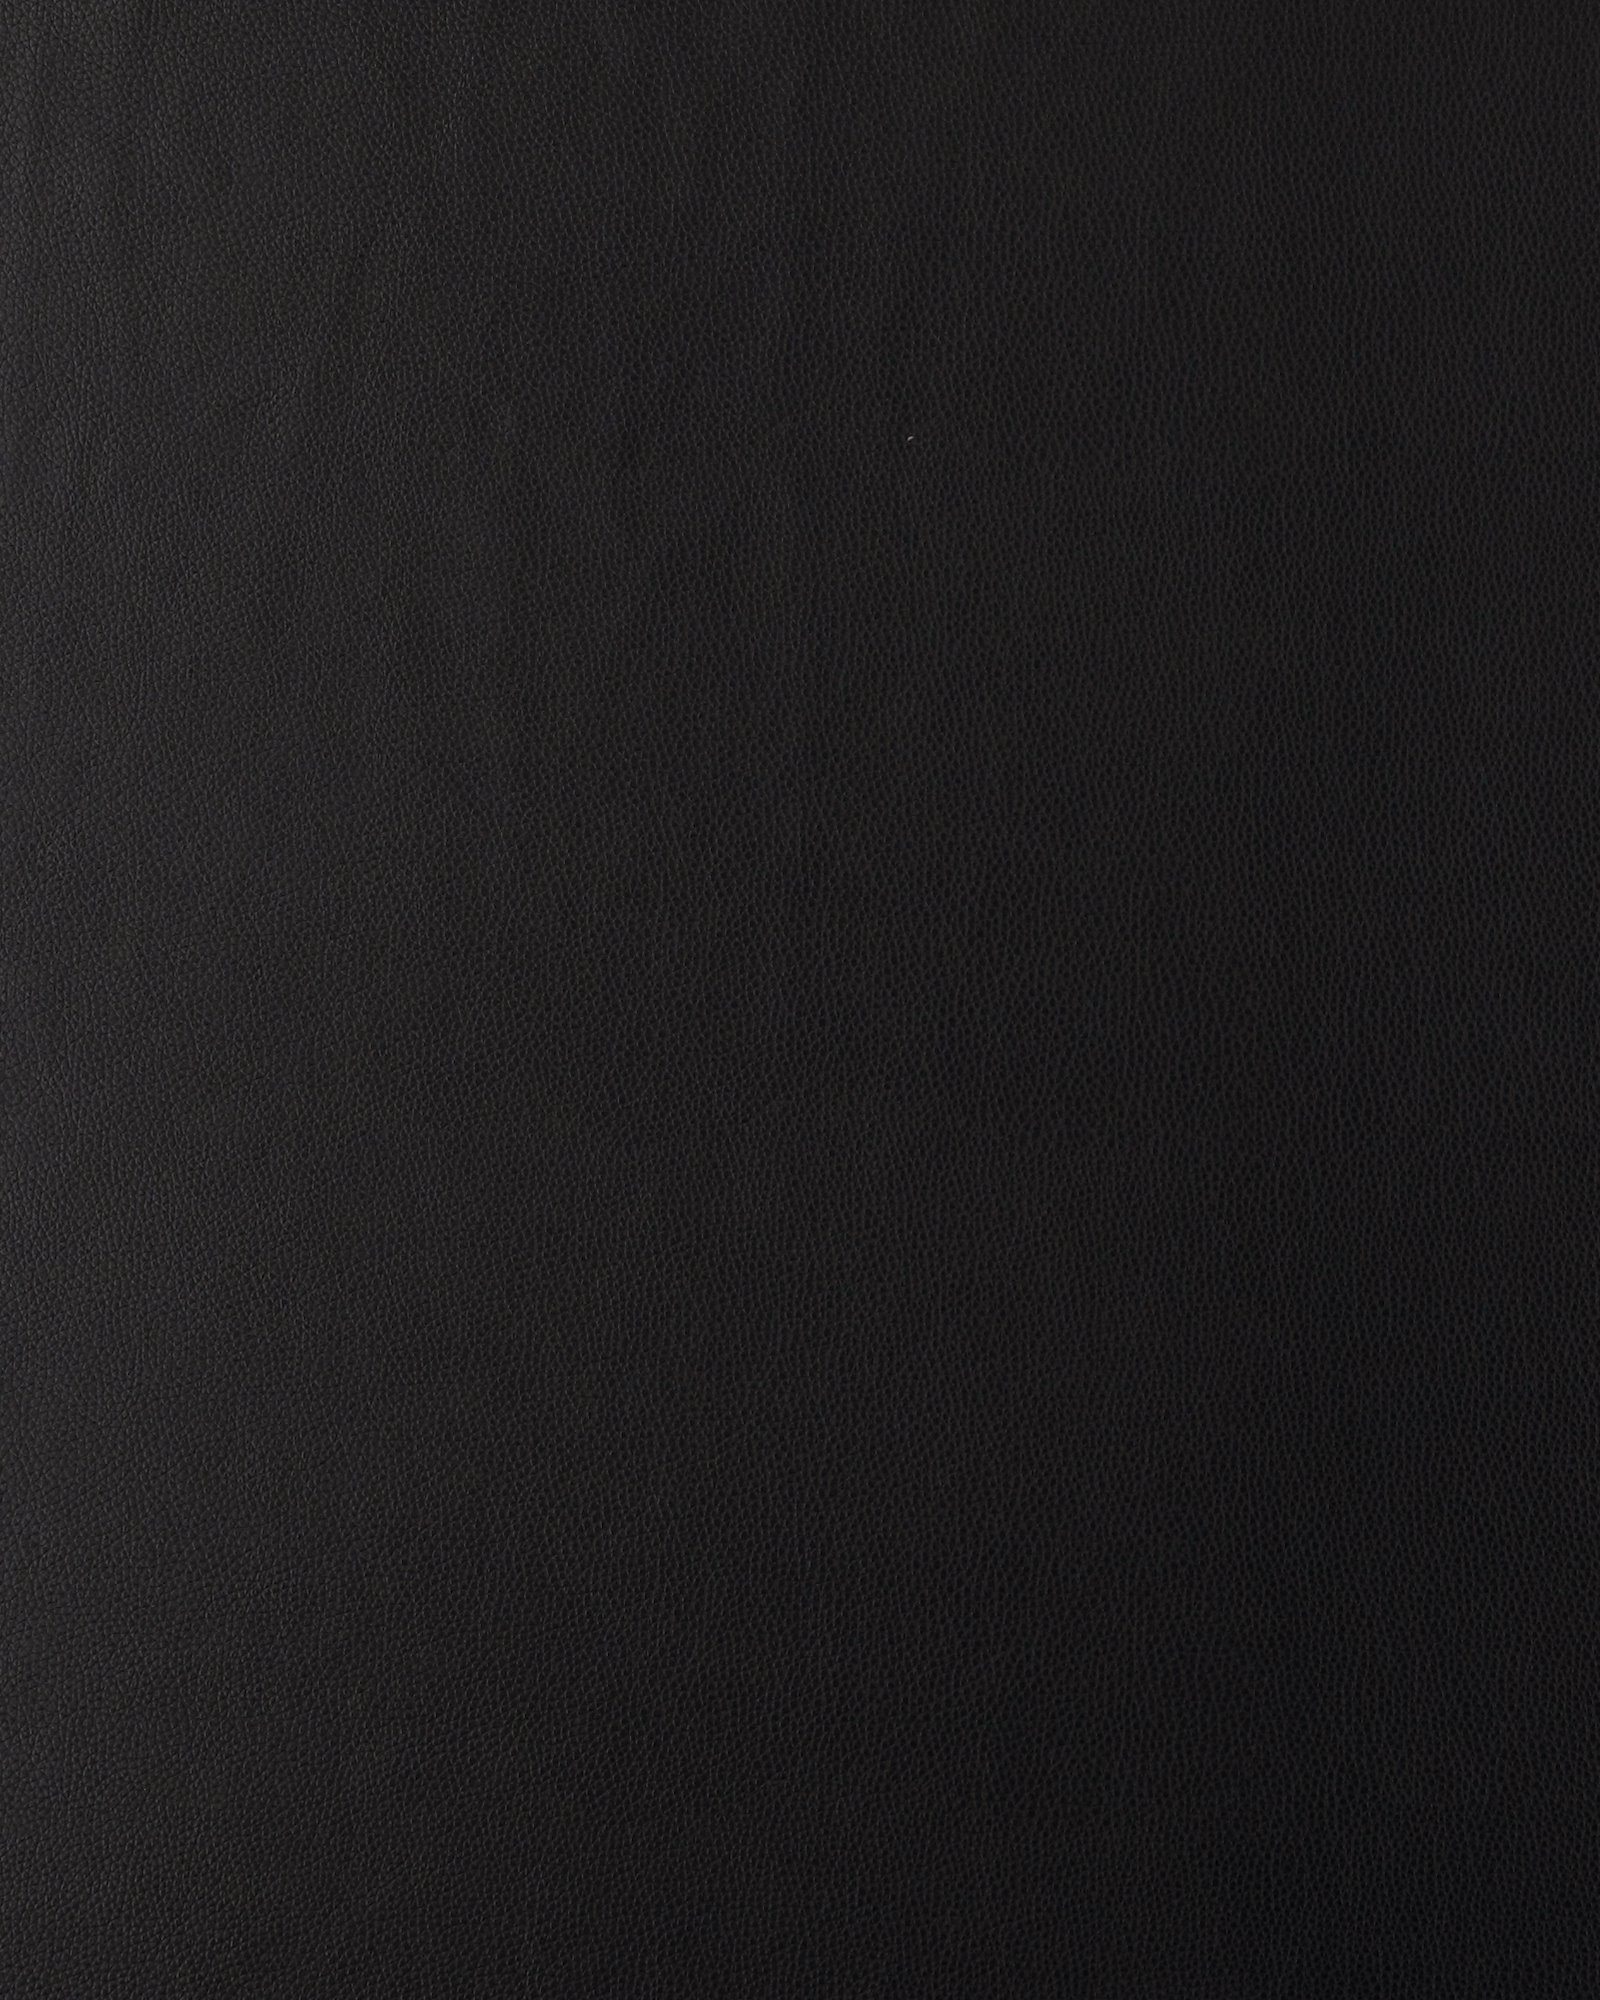 Bøffel læderlook sort PU coated/præget 822305_pack_solid